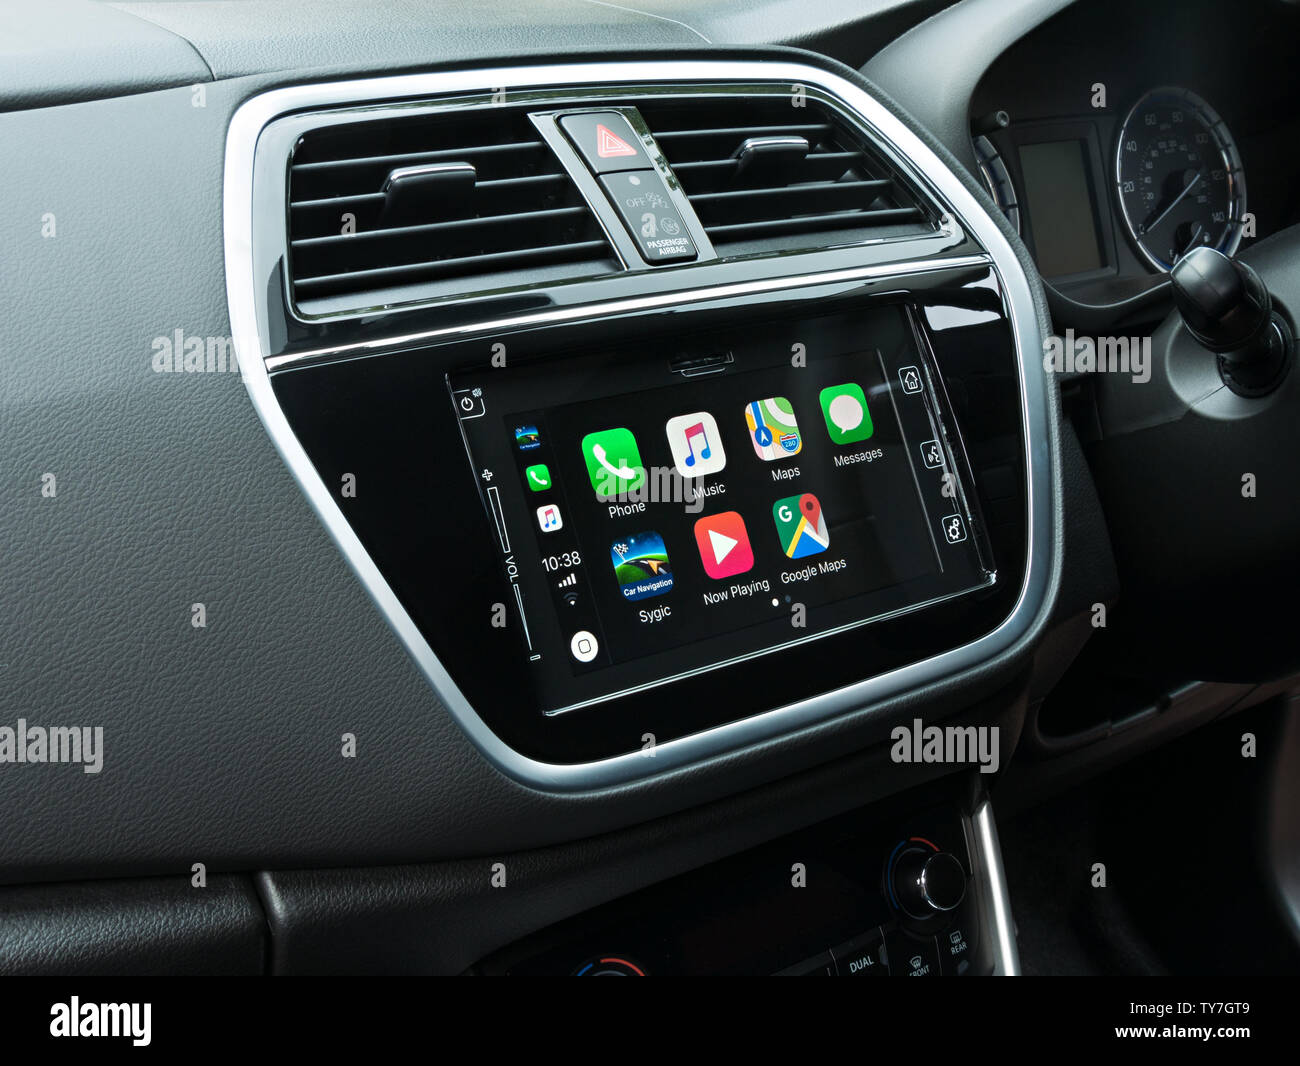 IOS 12 Apple CarPlay home screen menu on Bosch in car dashboard Satnav infotainment head unit in Suzuki S-Cross SX4 vehicle. Stock Photo